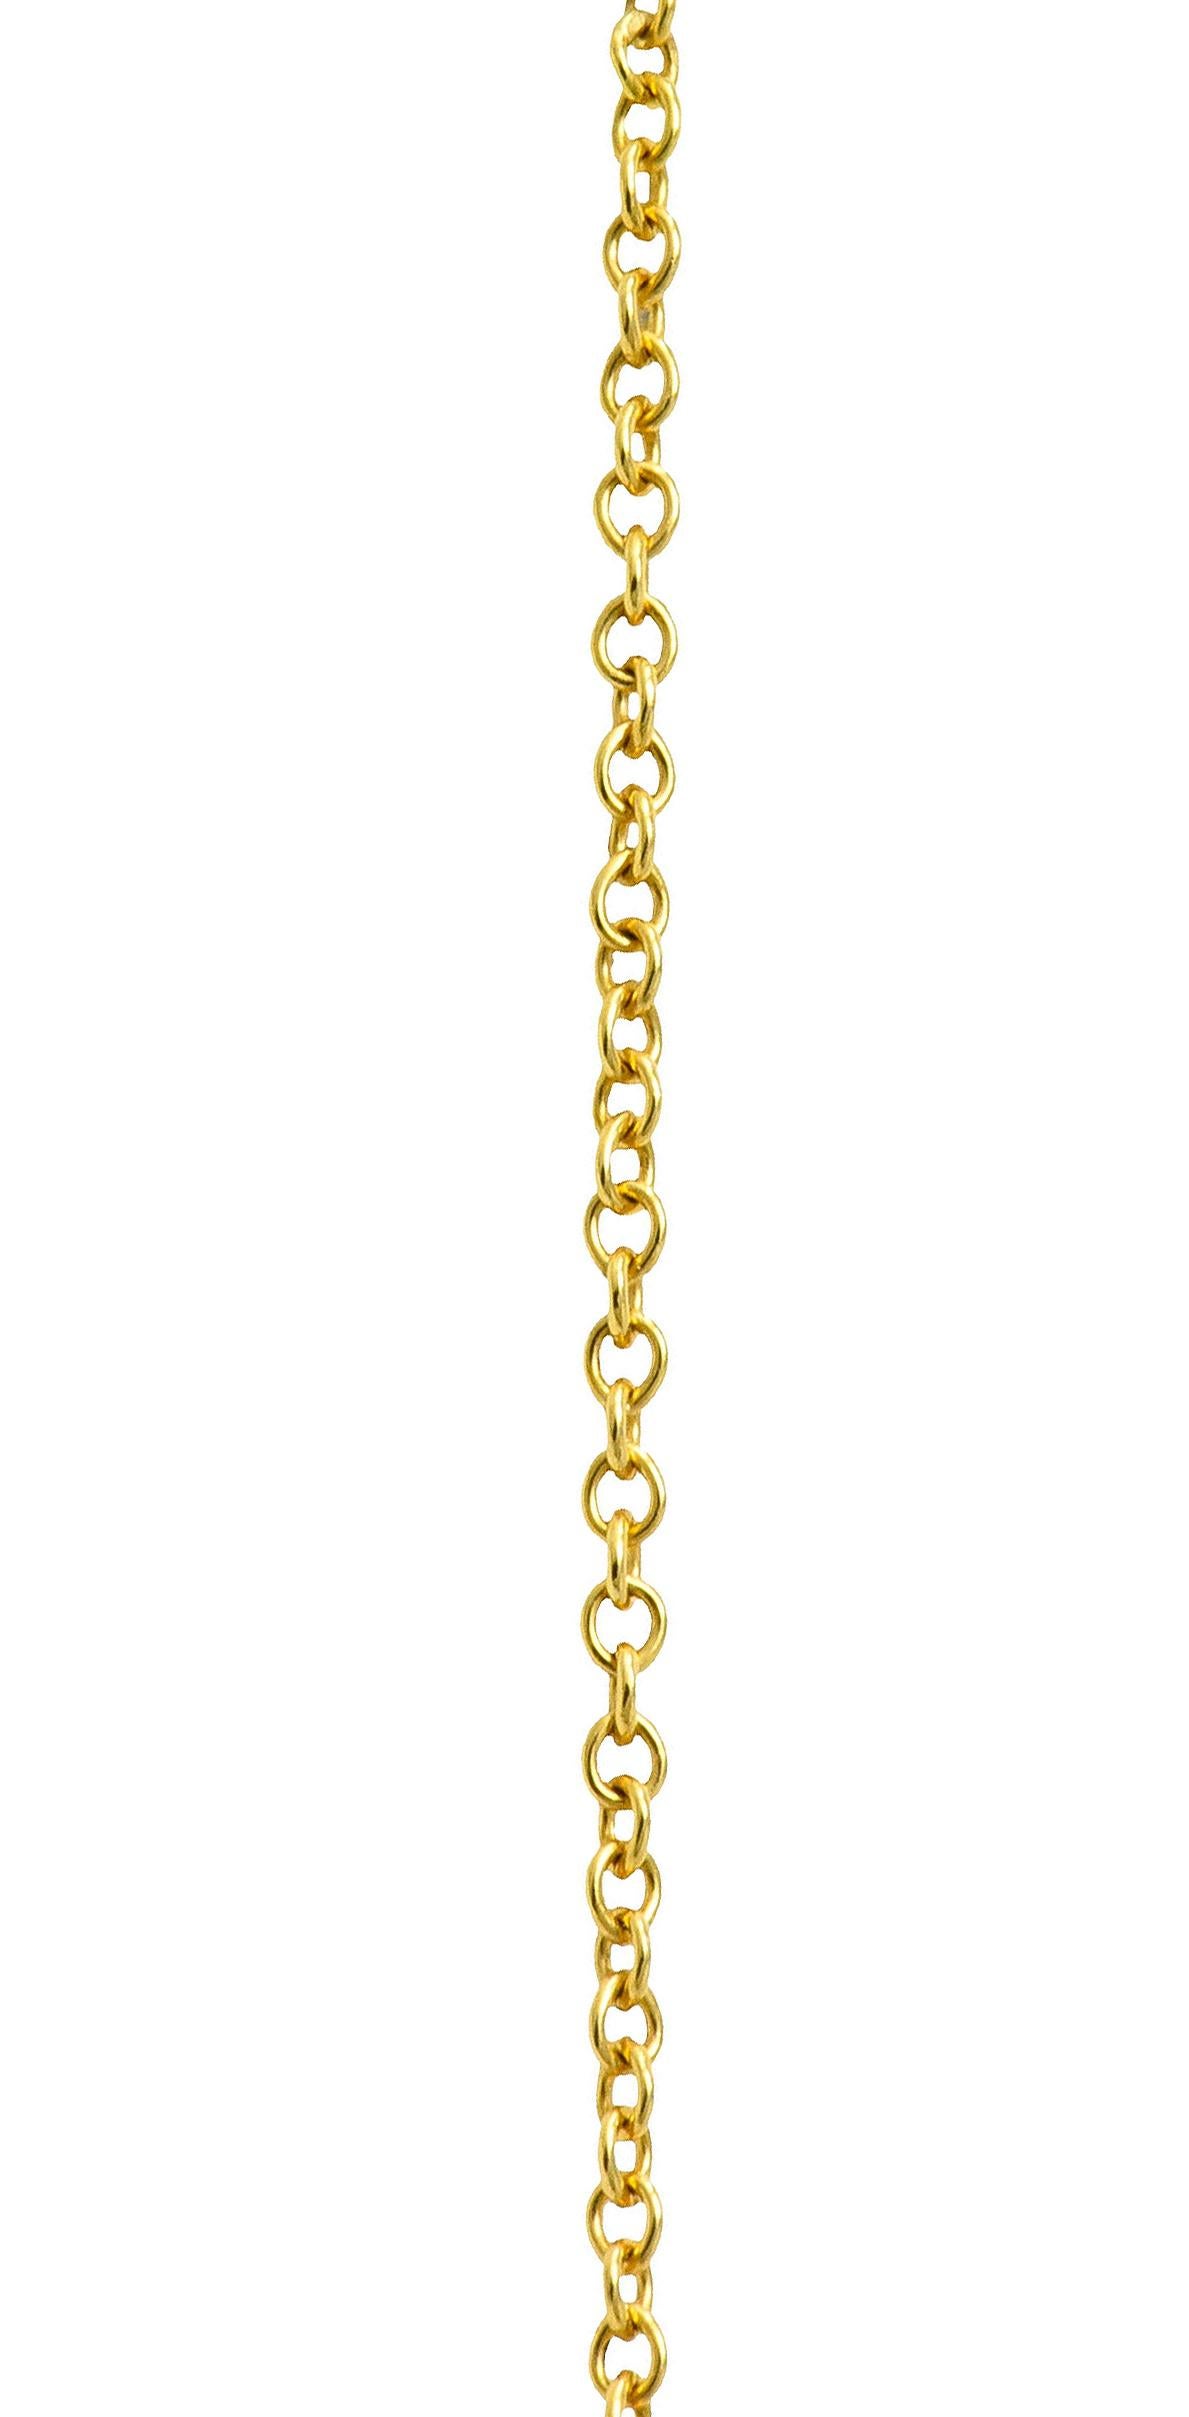 Contemporary Tiffany & Co. Lapis Lazuli 18 Karat Gold Cross My Heart Necklace